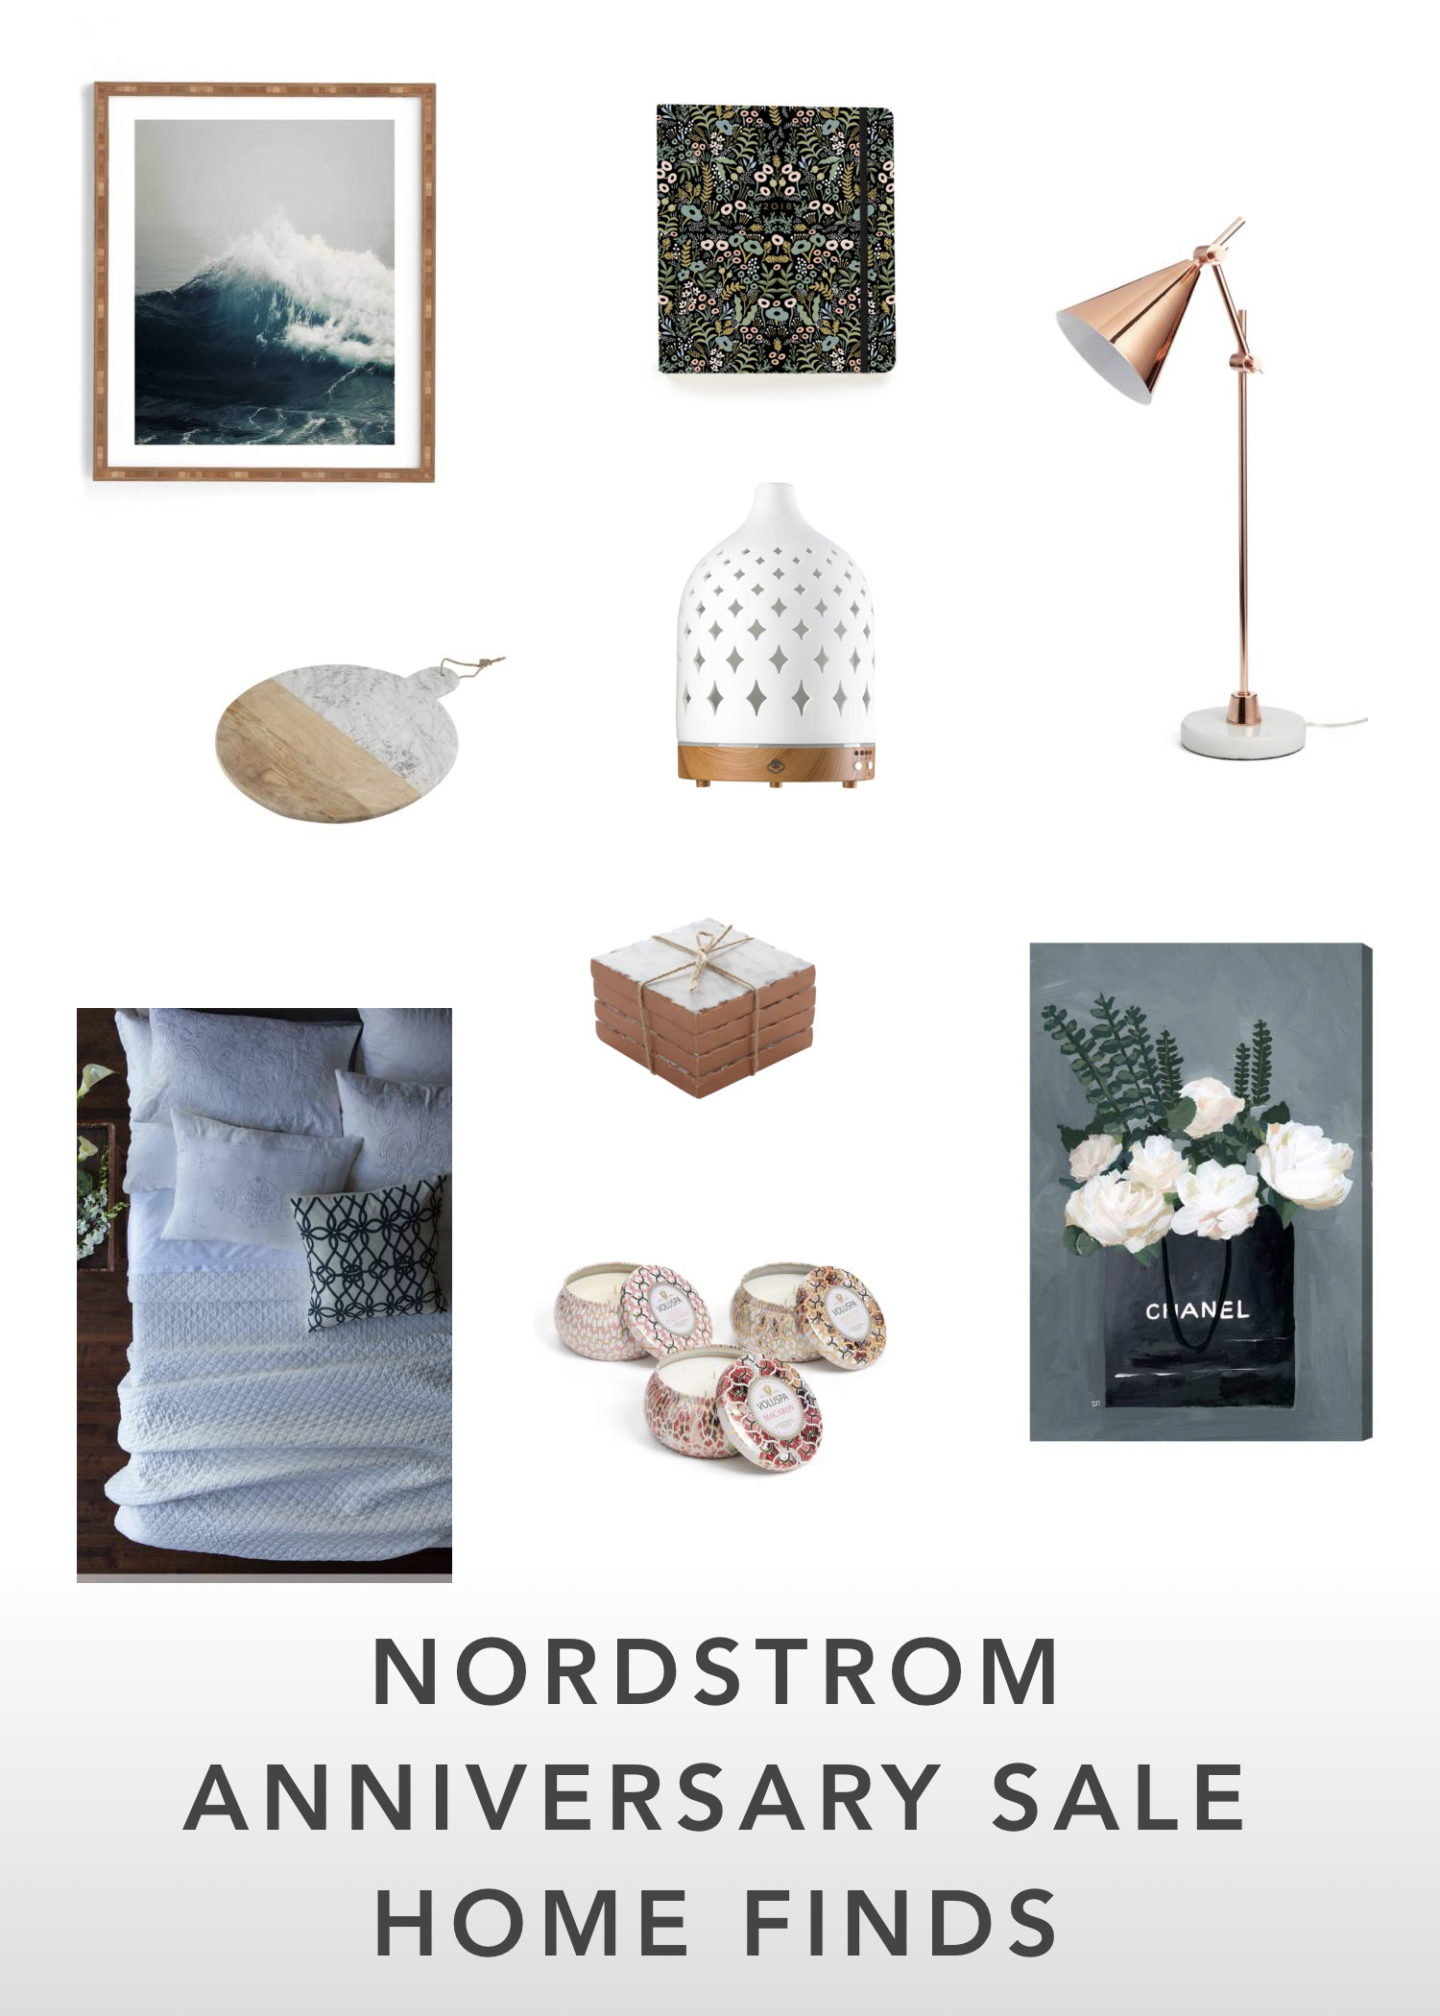 Nordstrom Anniversary Sale Home Finds | $500 Nordstrom Gift Card Giveaway | Lili Alessandra Bedding at Nordstrom